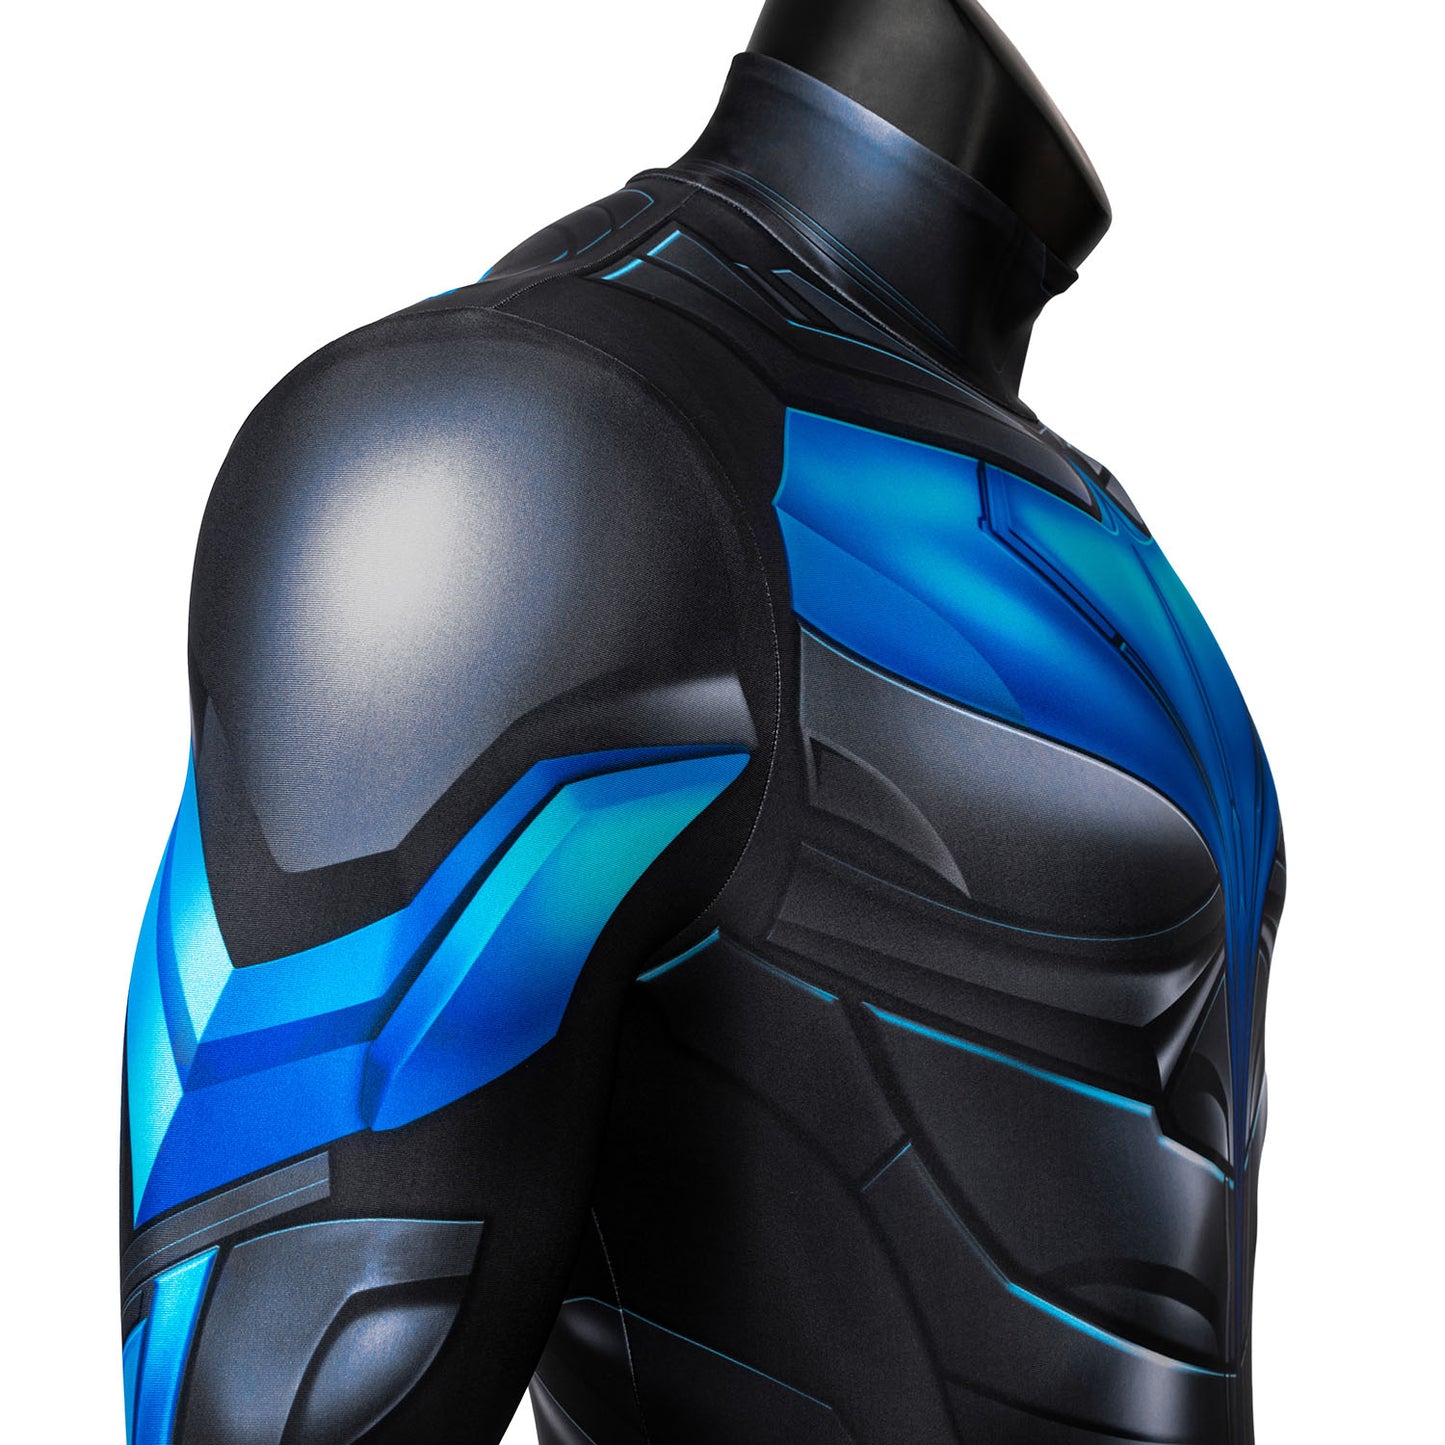 Batman Titans Season 2 Nightwing Male Jumpsuit Cosplay Costumes